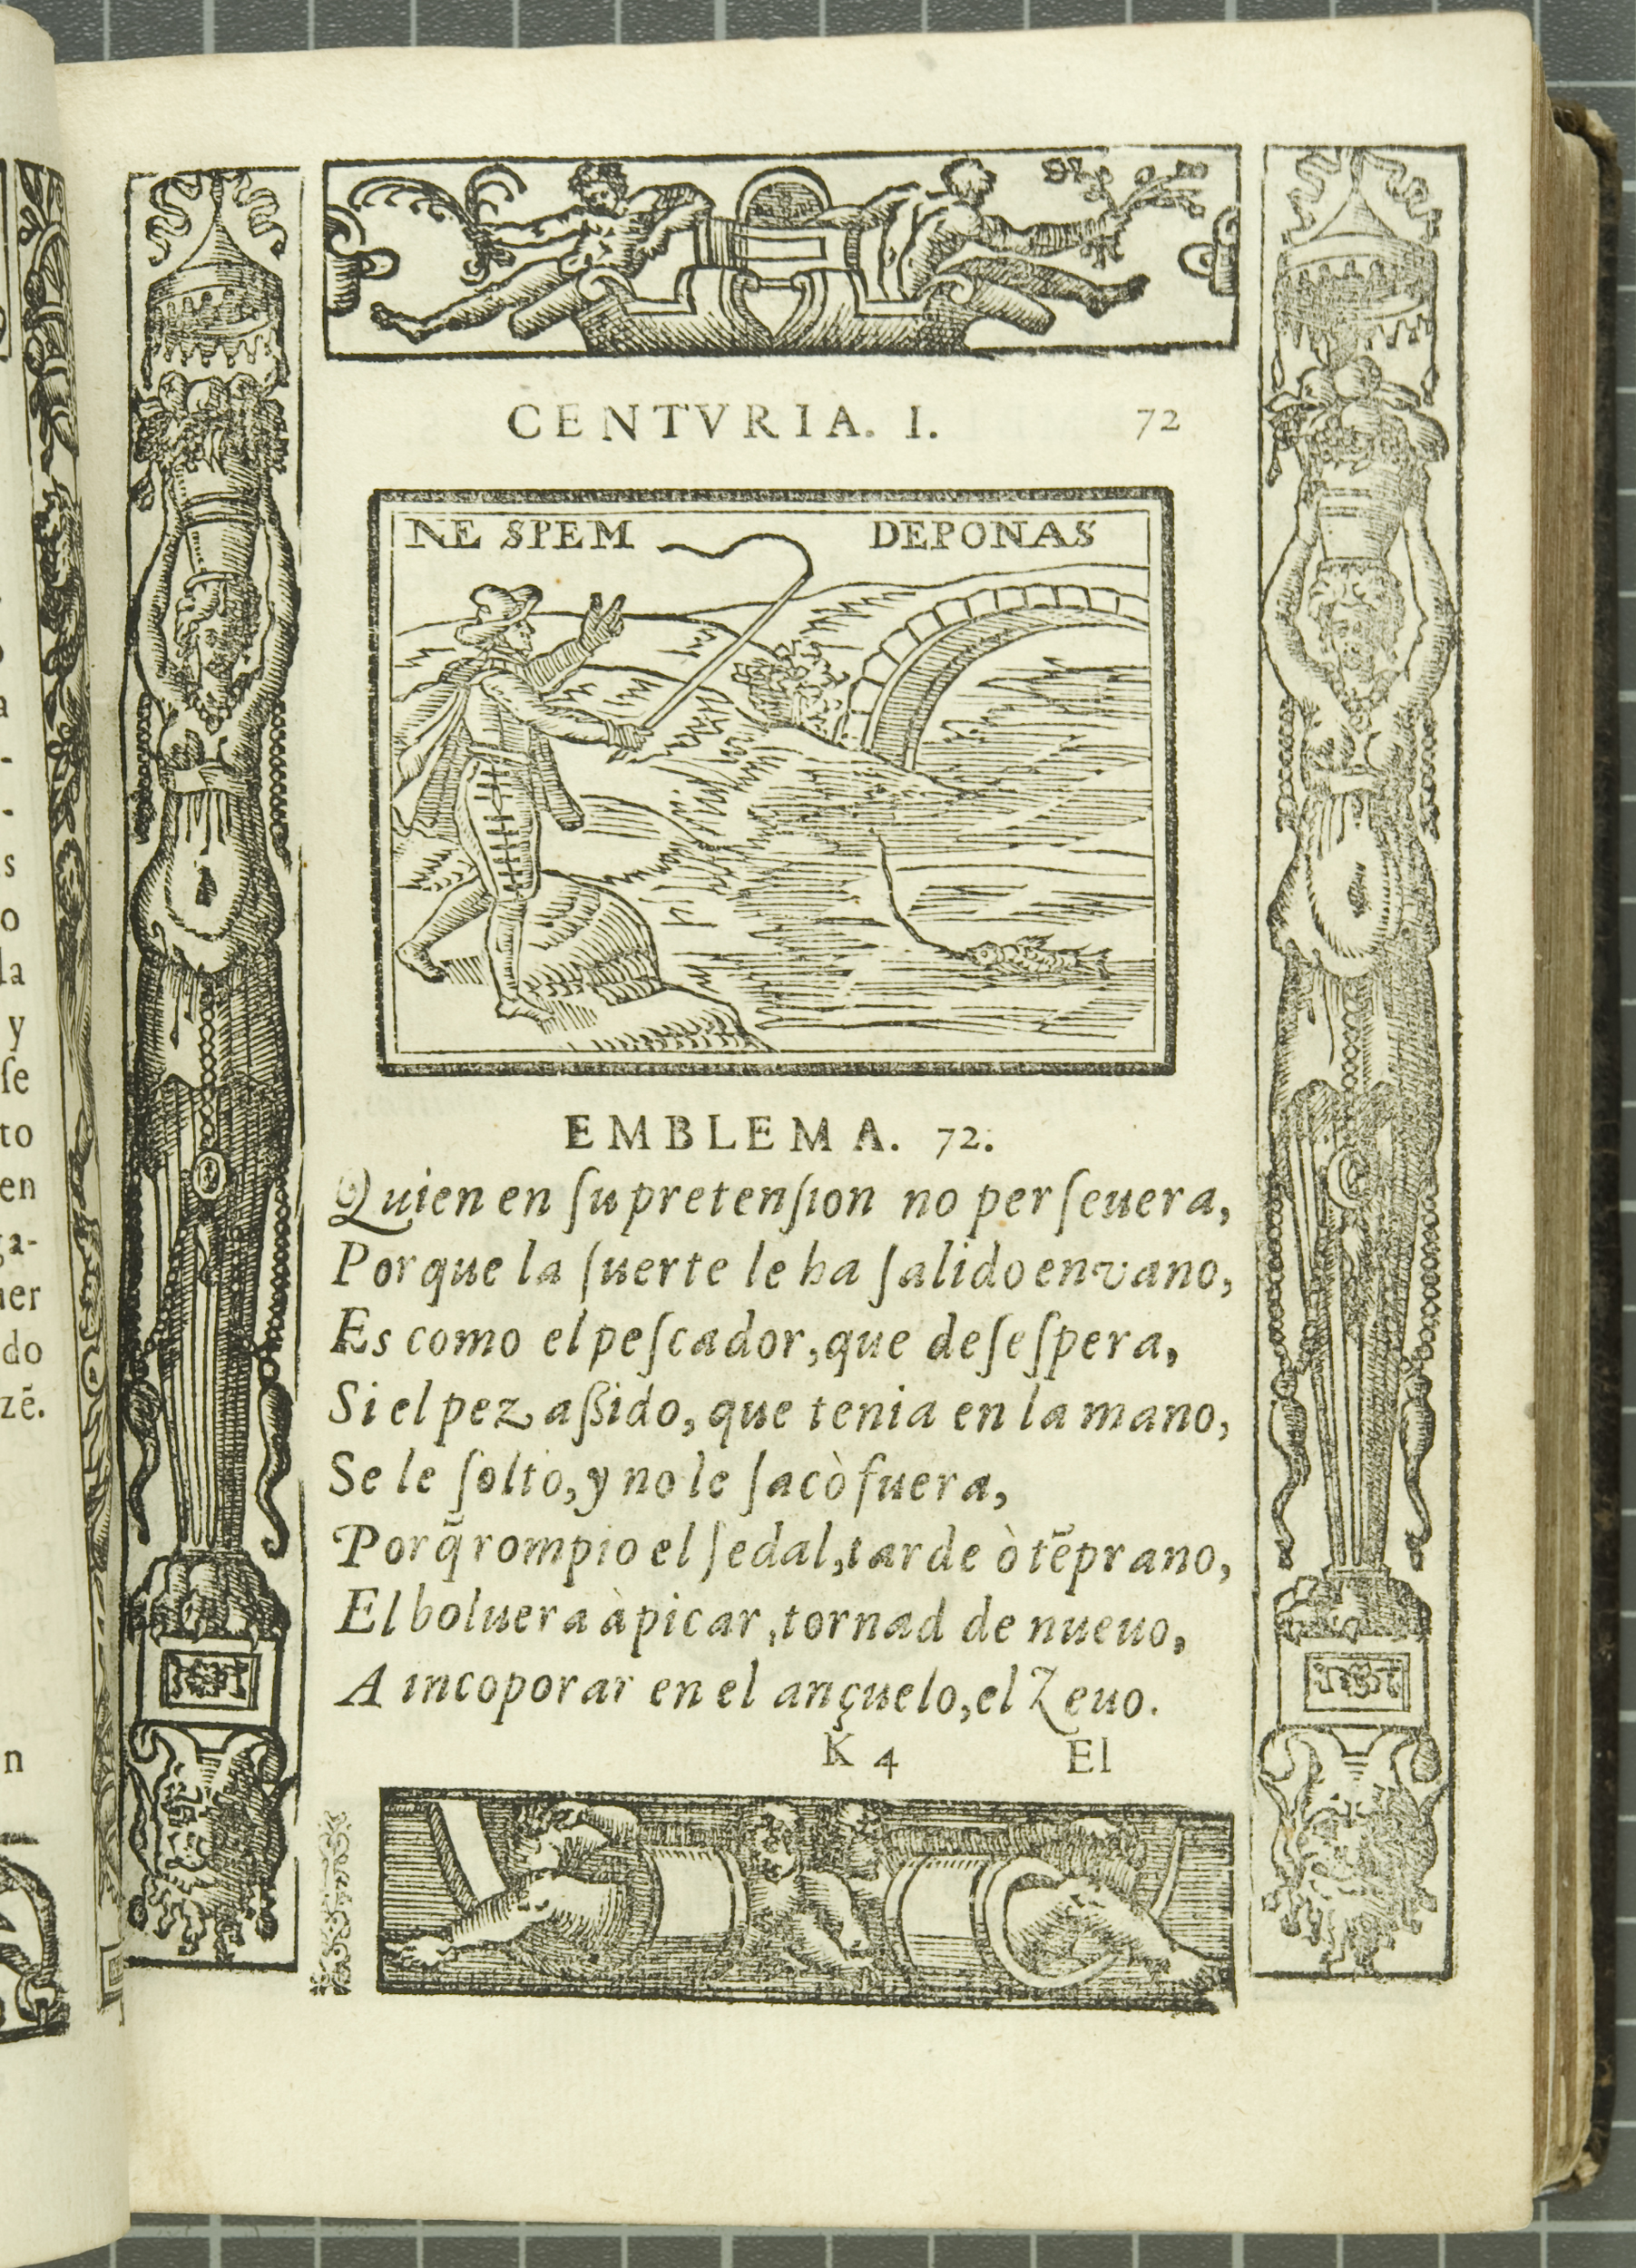 Emblem 72: "Ne spem deponas" (Do not lay aside hope), from Covarrubias’s Emblemas morales (1610).